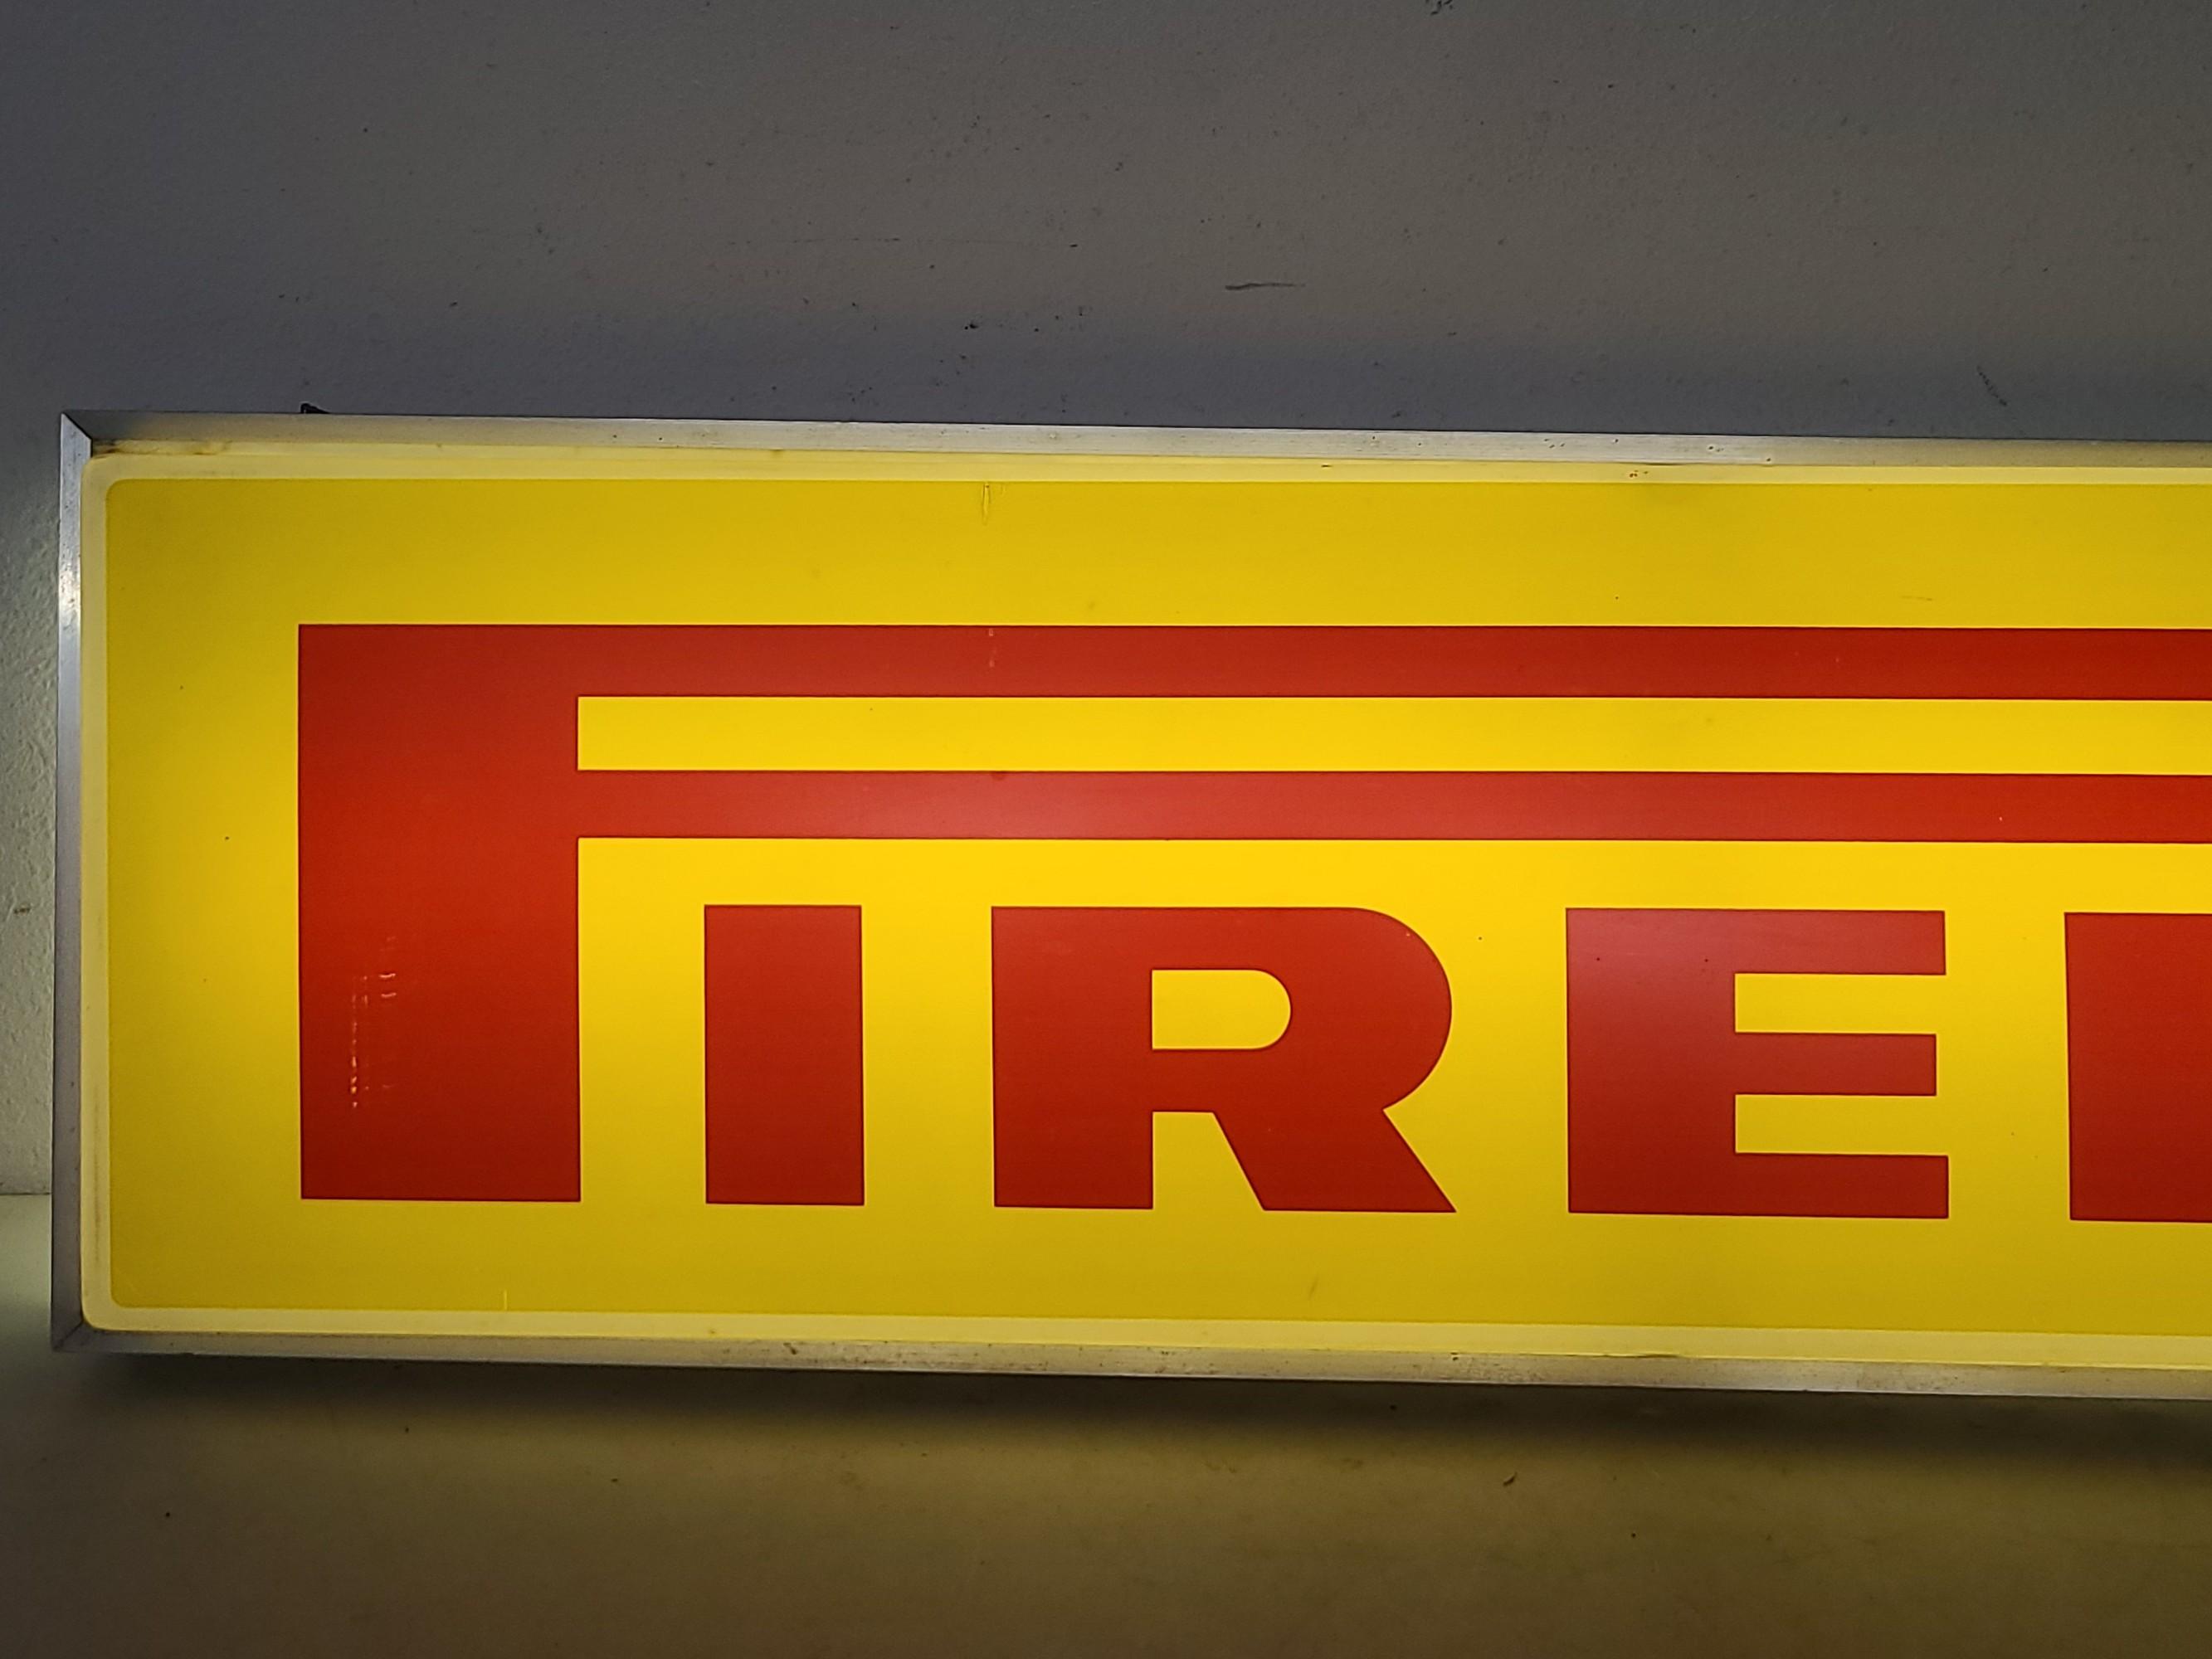 Pirelli Tire Light Sign